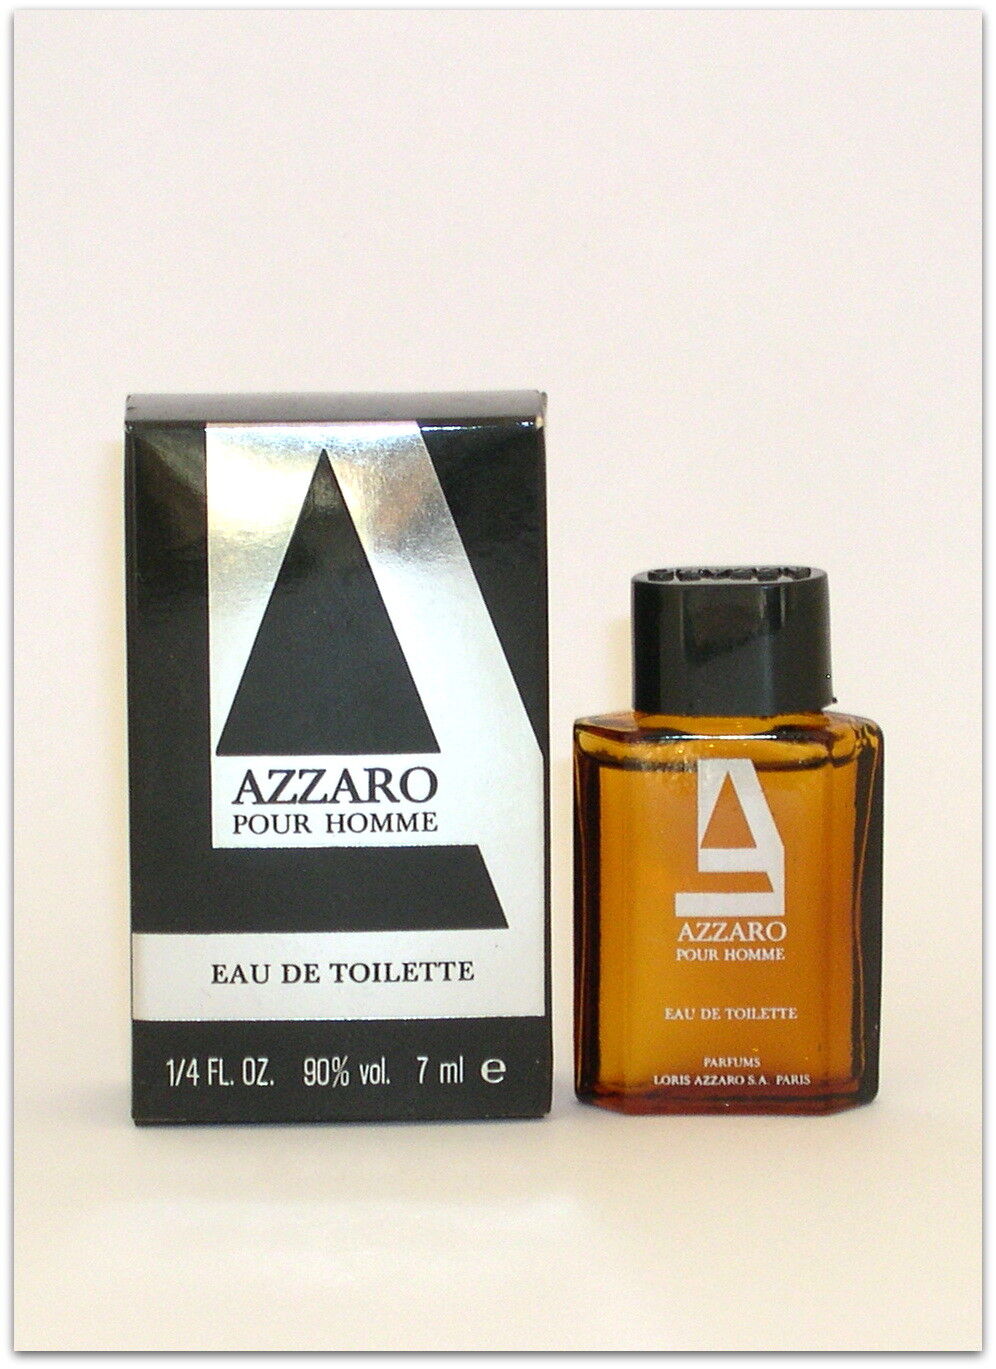 Azzaro Men's Eau de toilette 7 ml. 1/4 fl oz mini perfume for collection.